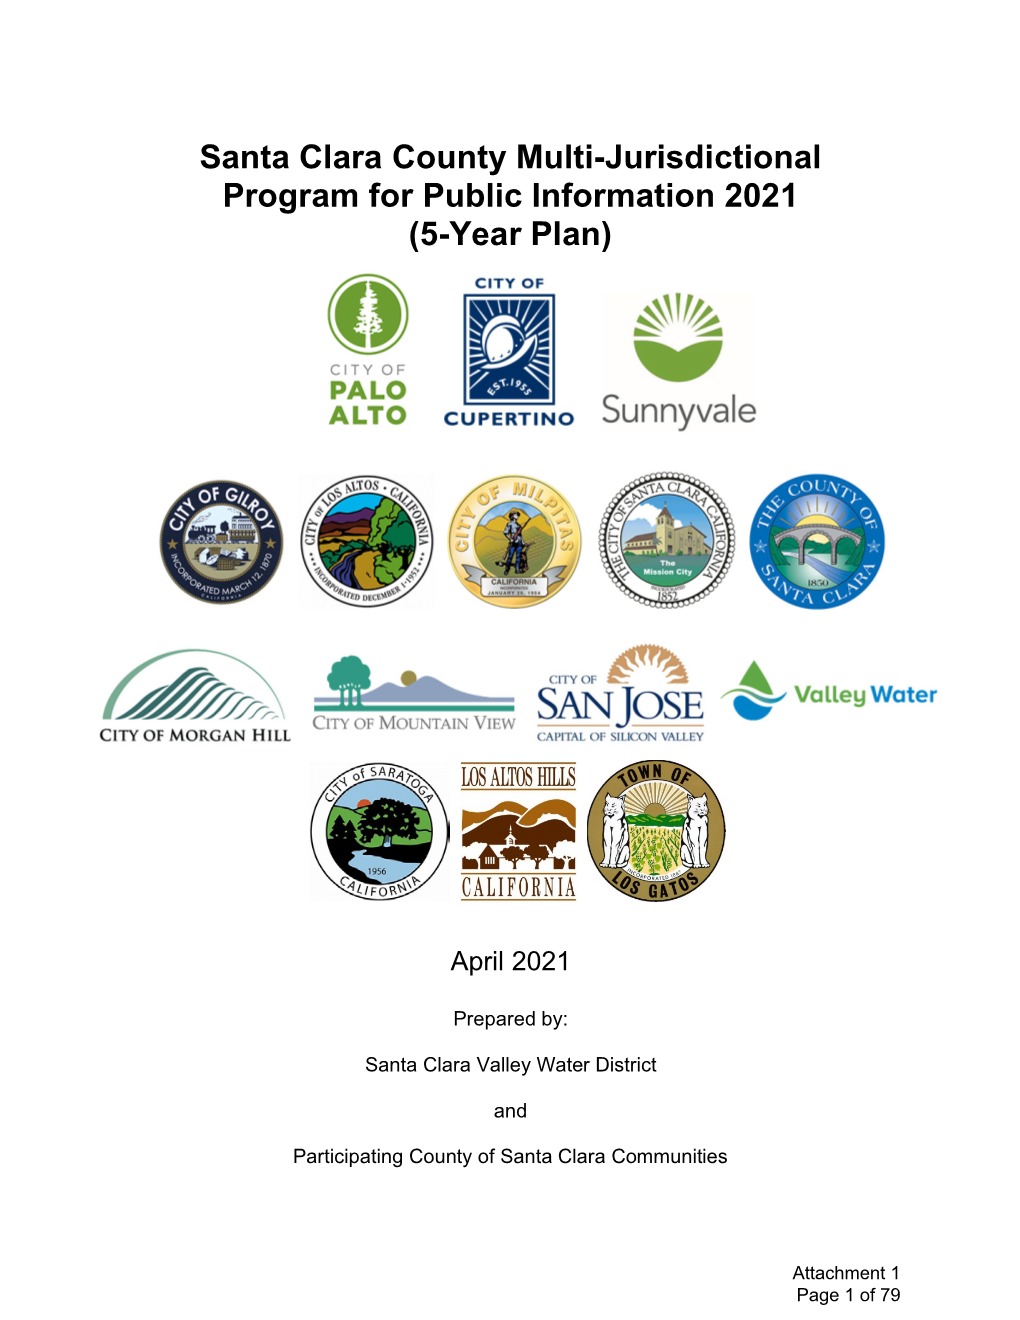 Santa Clara County Multi-Jurisdictional Program for Public Information 2021 (5-Year Plan)